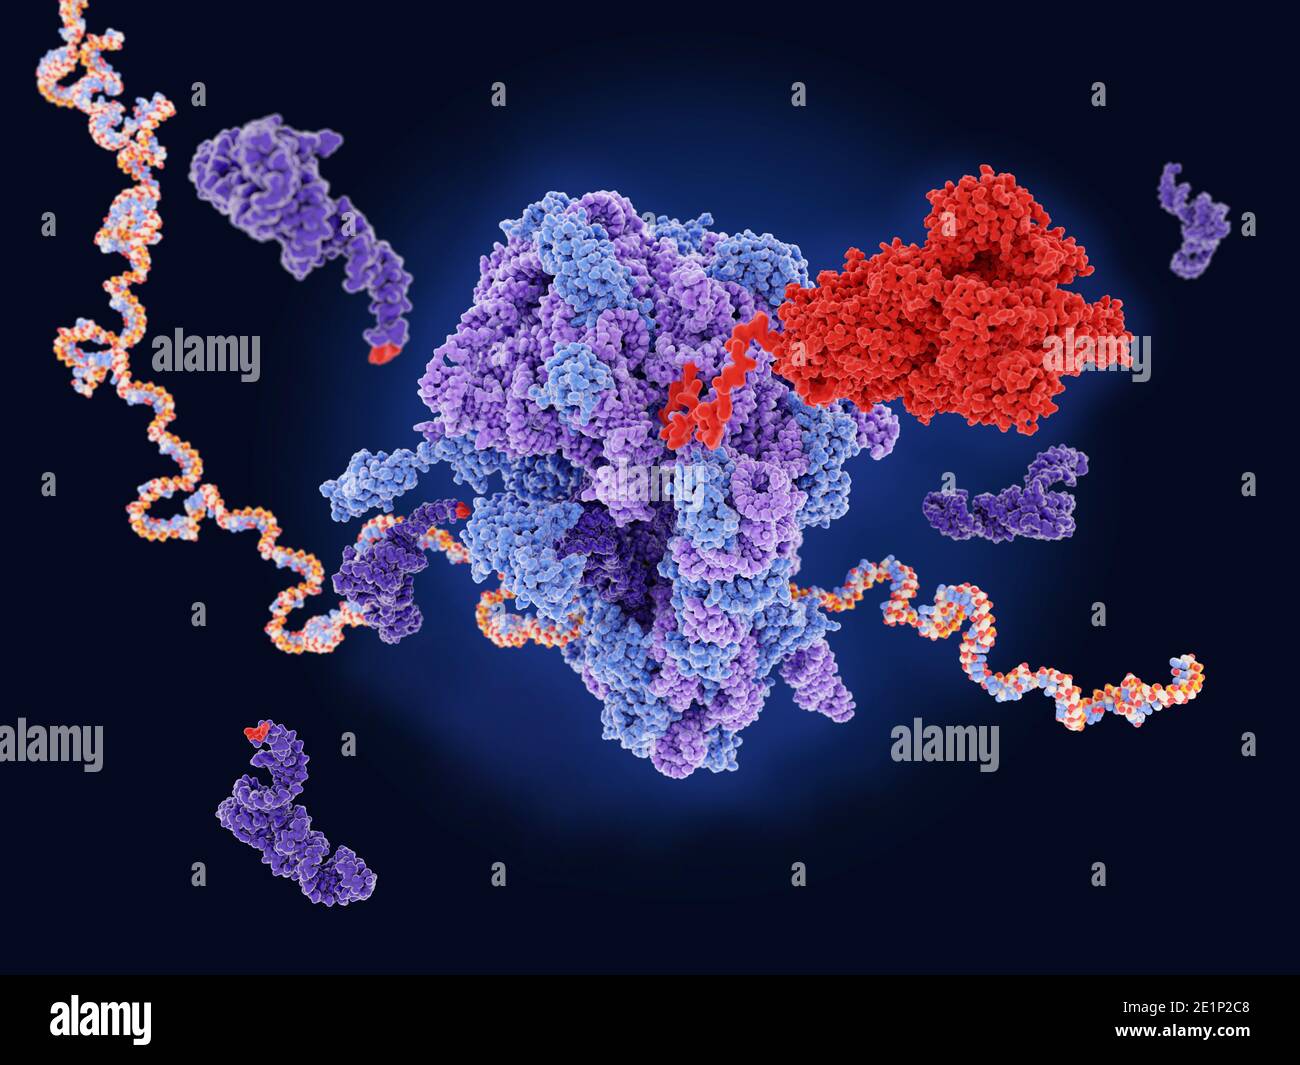 Ribosome making coronavirus spike protein, illustration Stock Photo